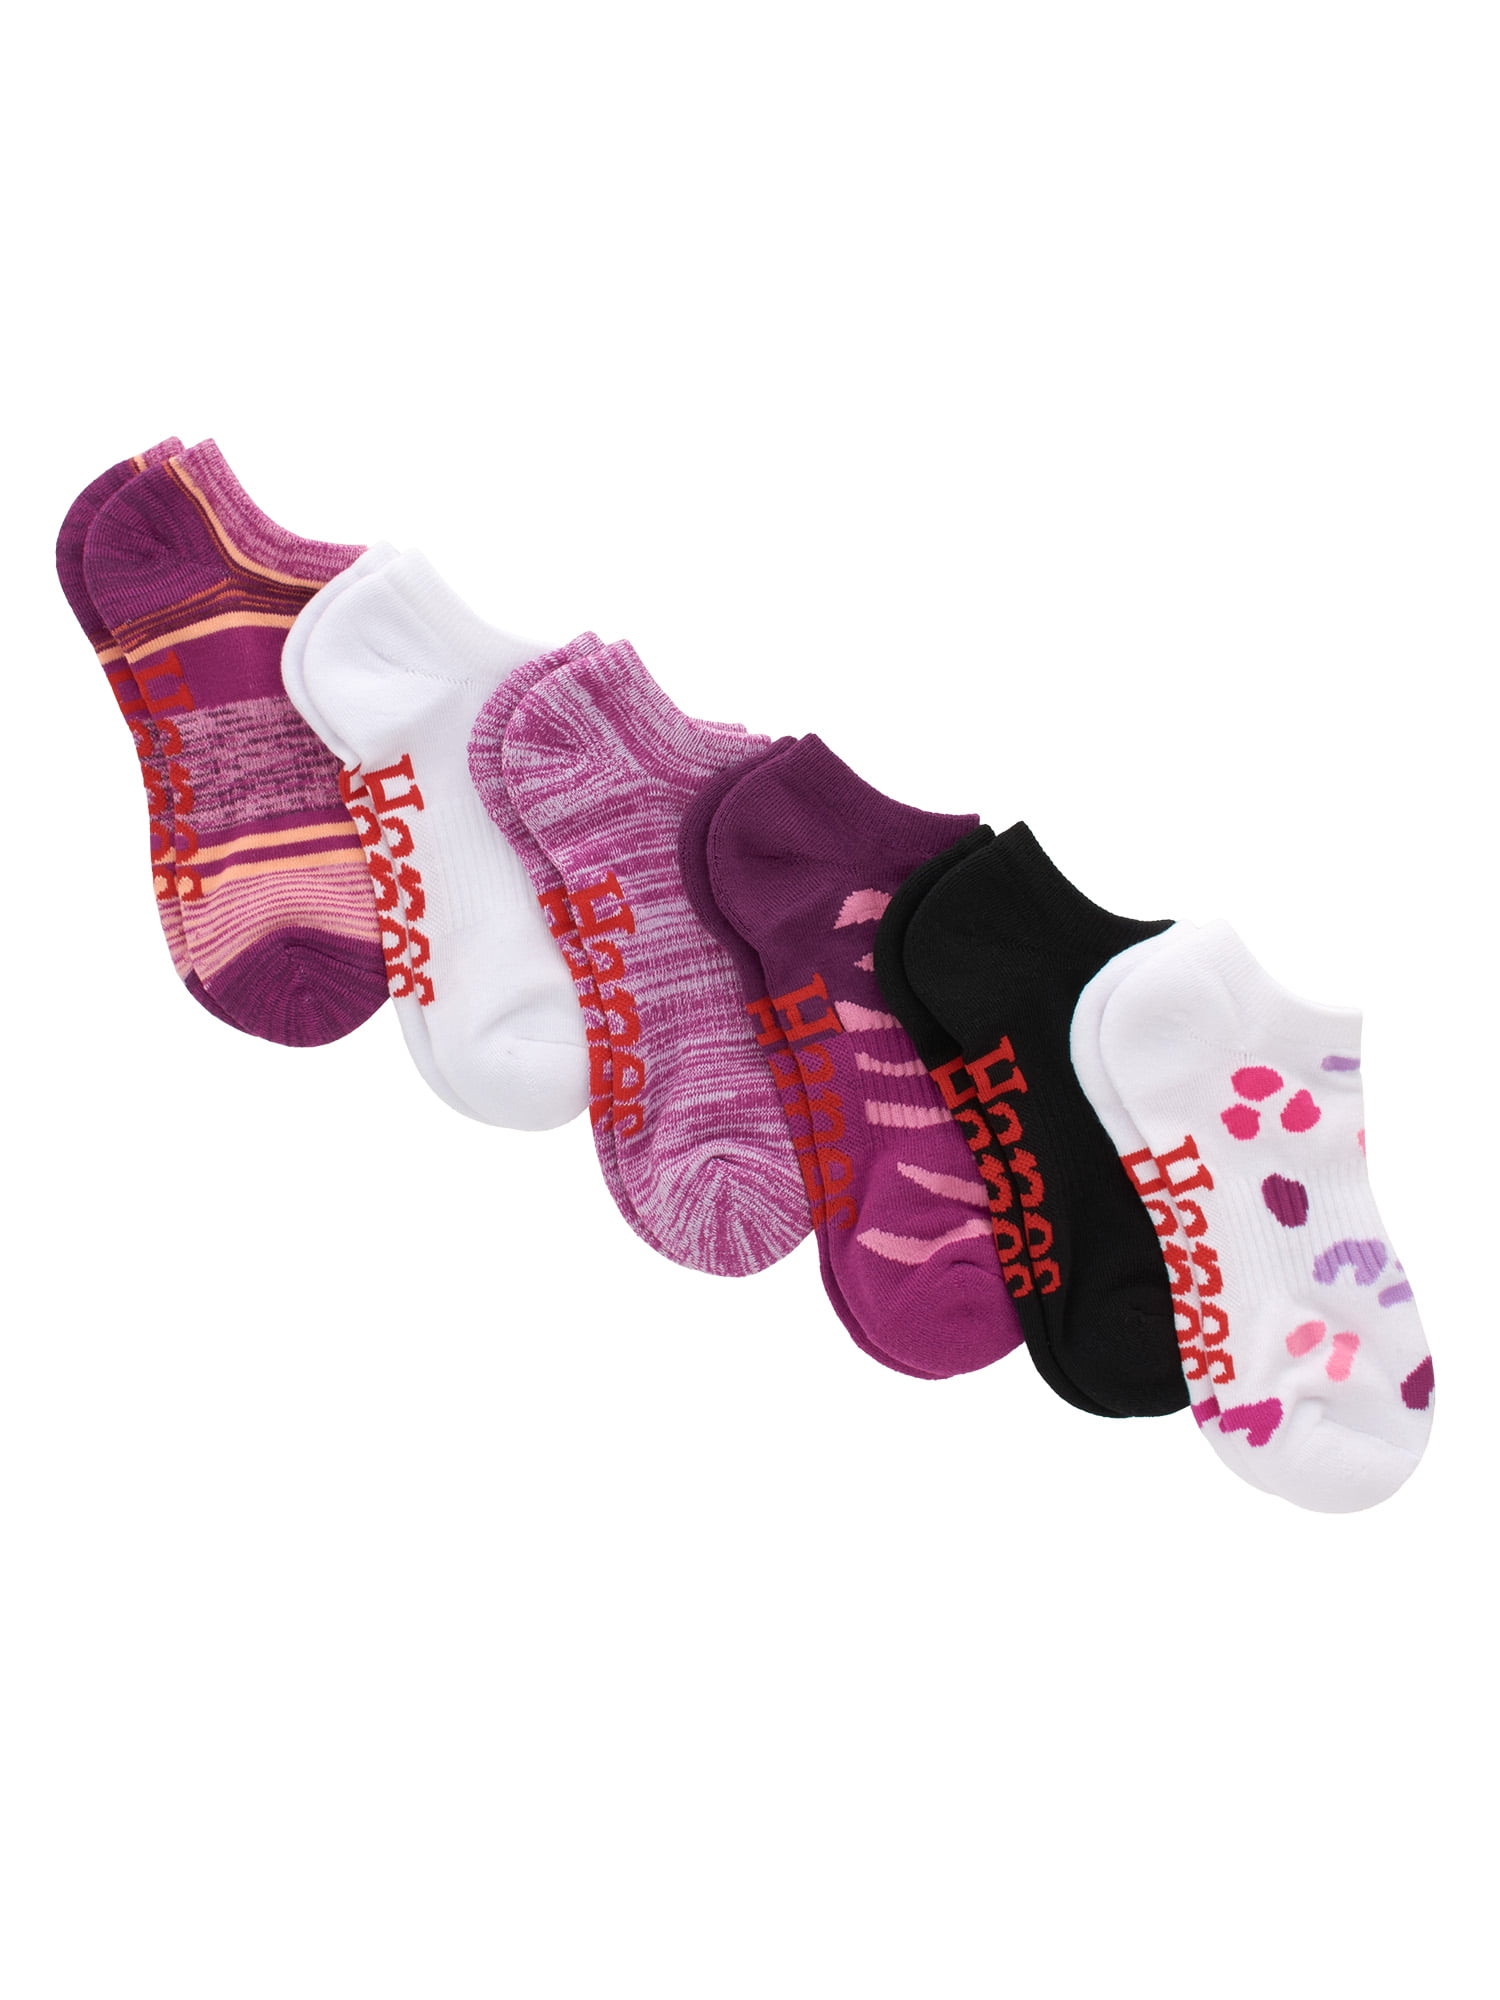 Hanes Originals Women's No Show Socks, Moisture Wicking, 6-Pair